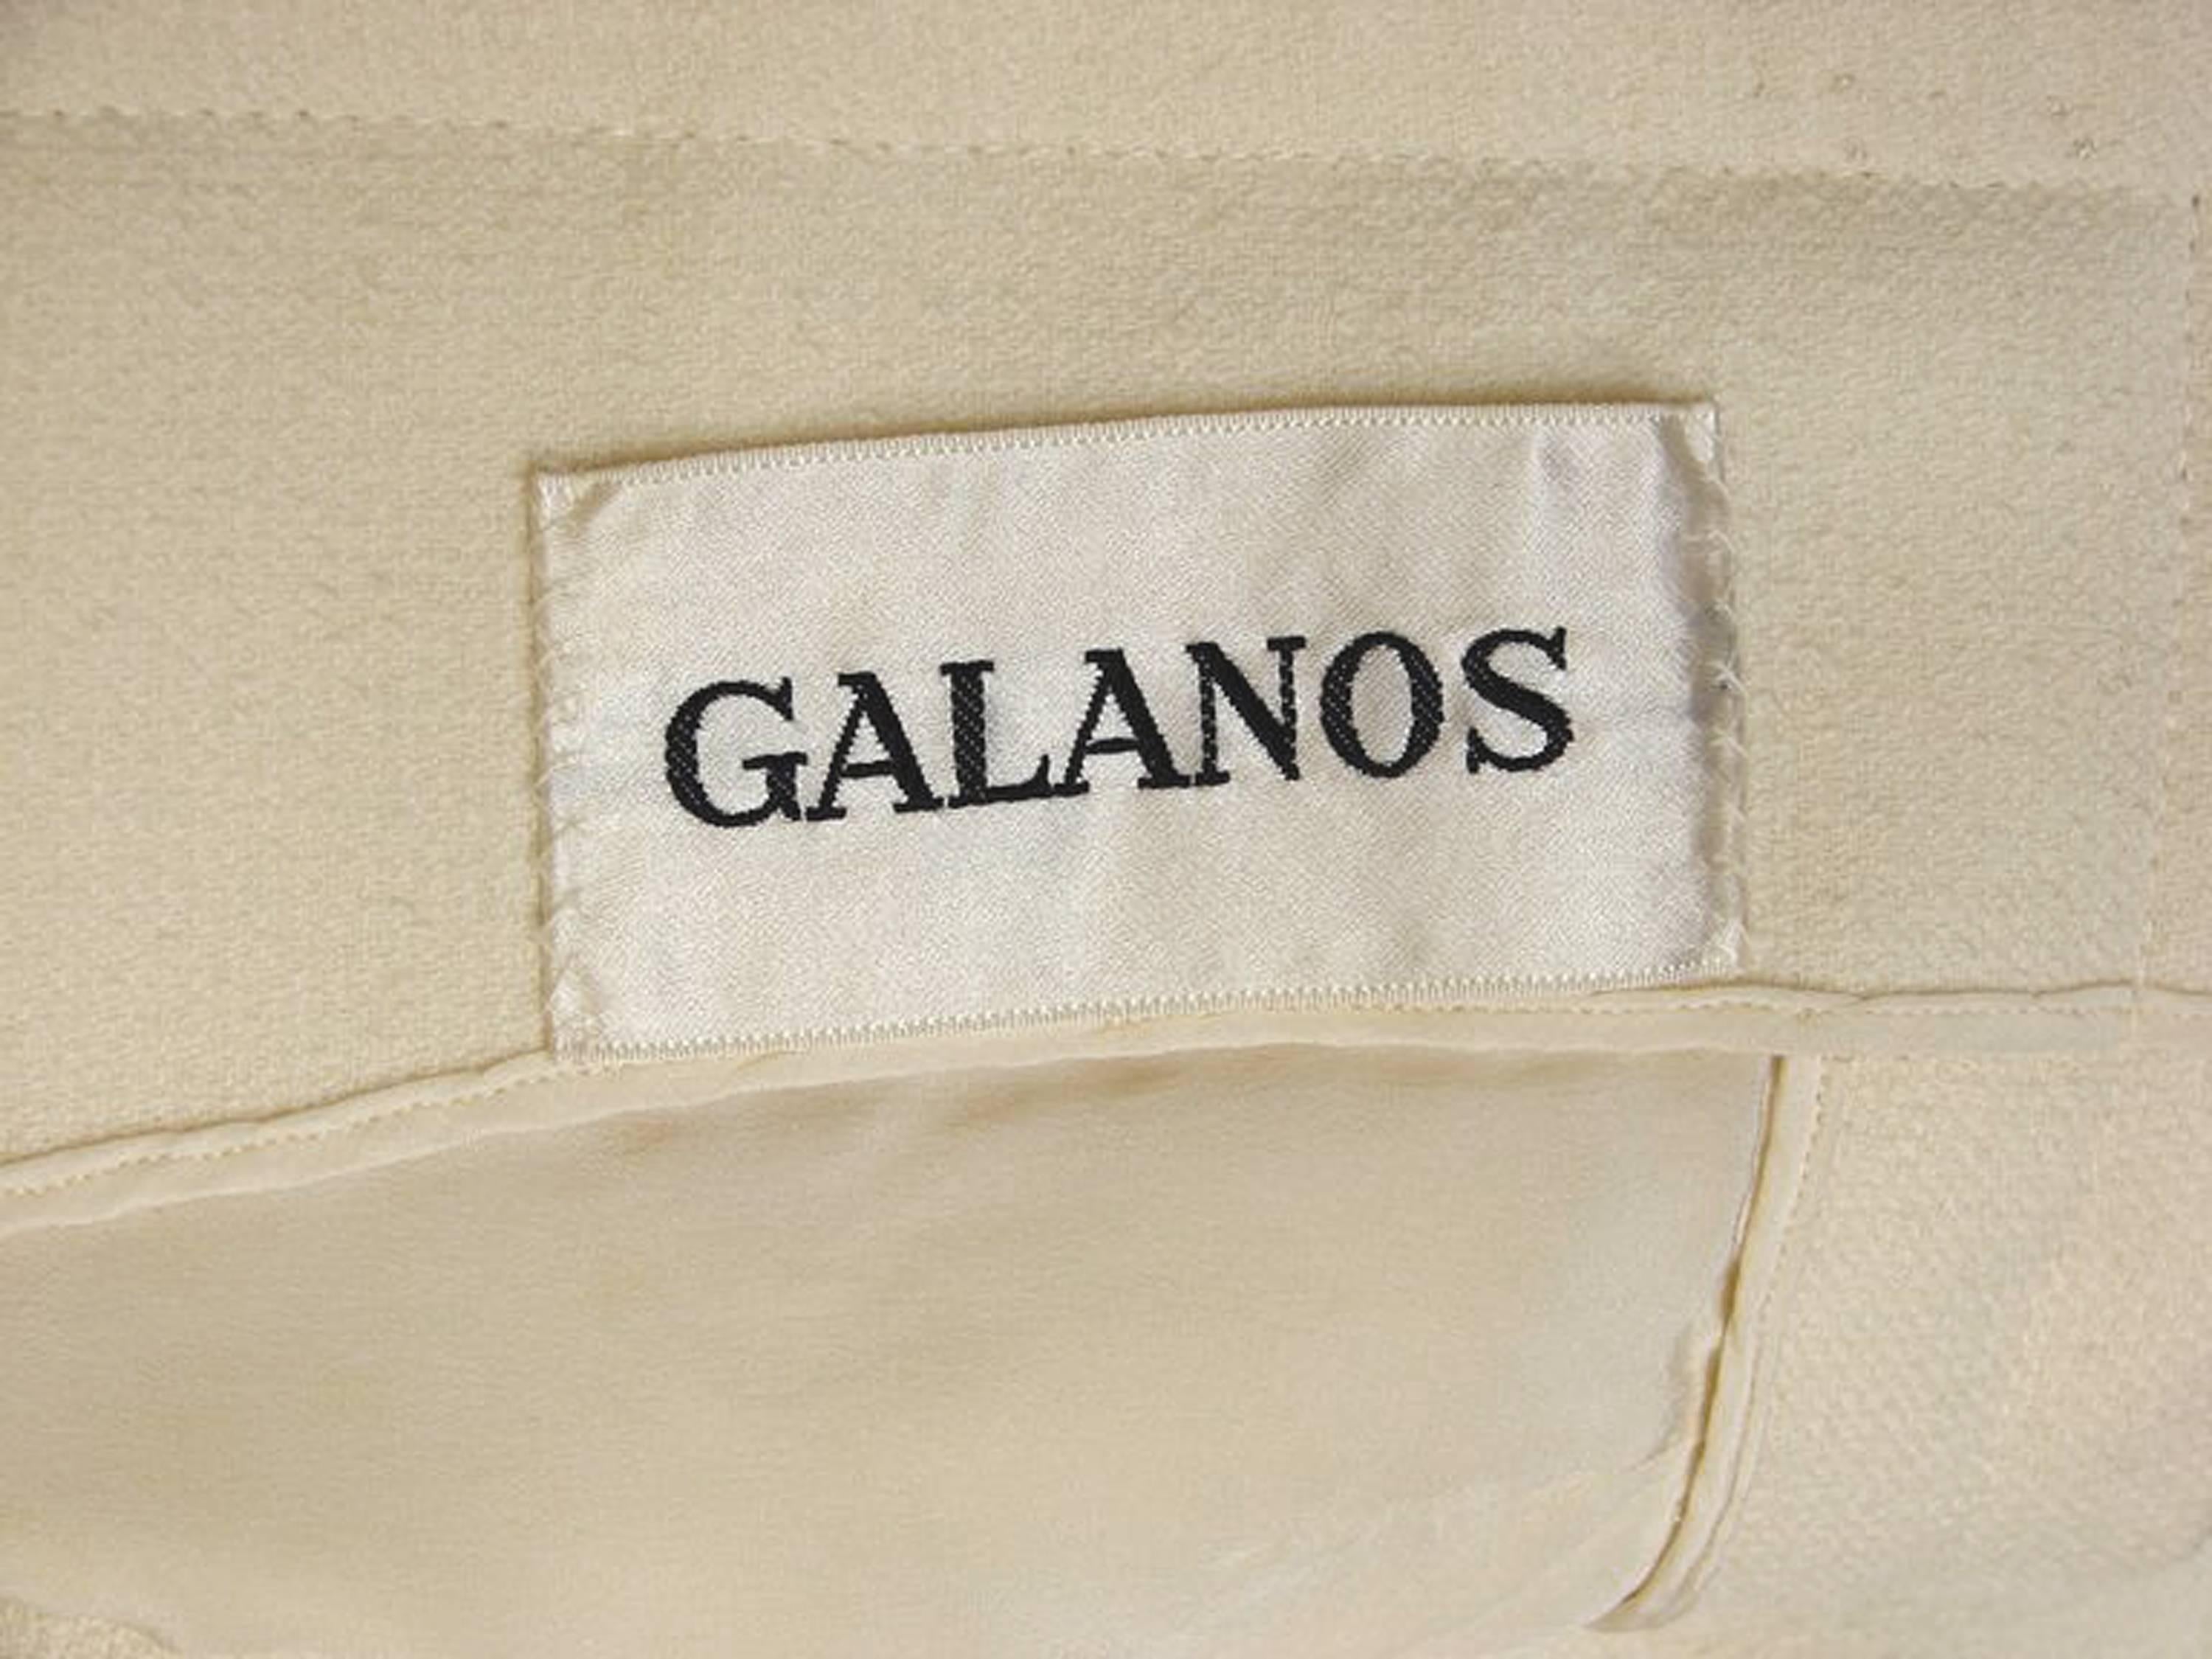 Ultra Rare Galanos Cream Wool Dress with Cropped Jacket Ensemble 2pc Set 60s S 4